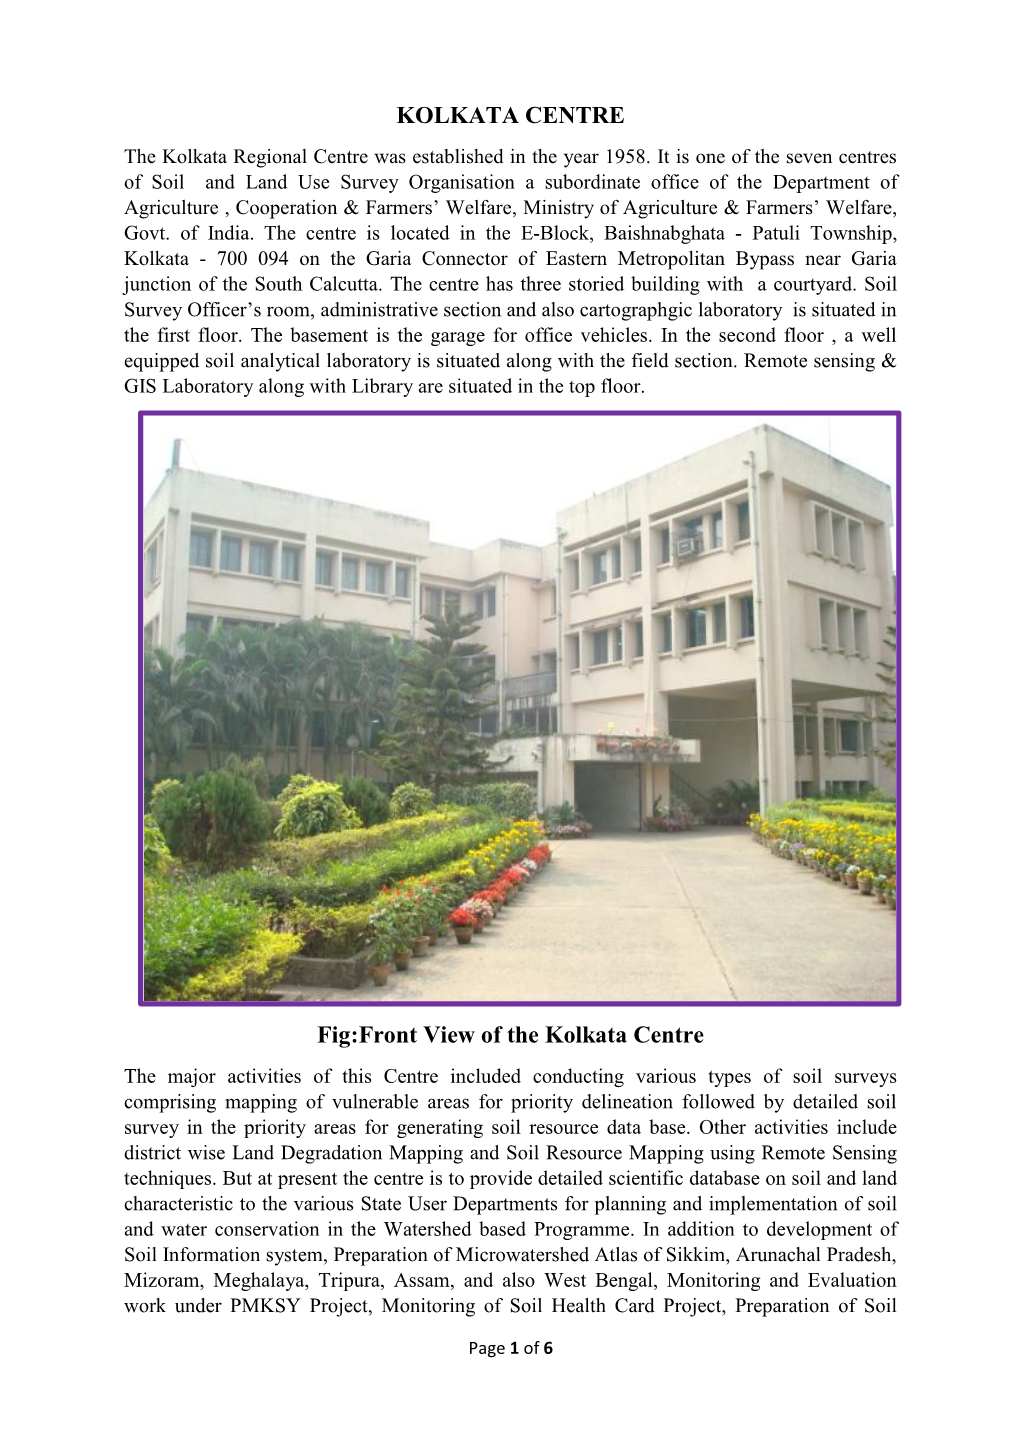 KOLKATA CENTRE the Kolkata Regional Centre Was Established in the Year 1958